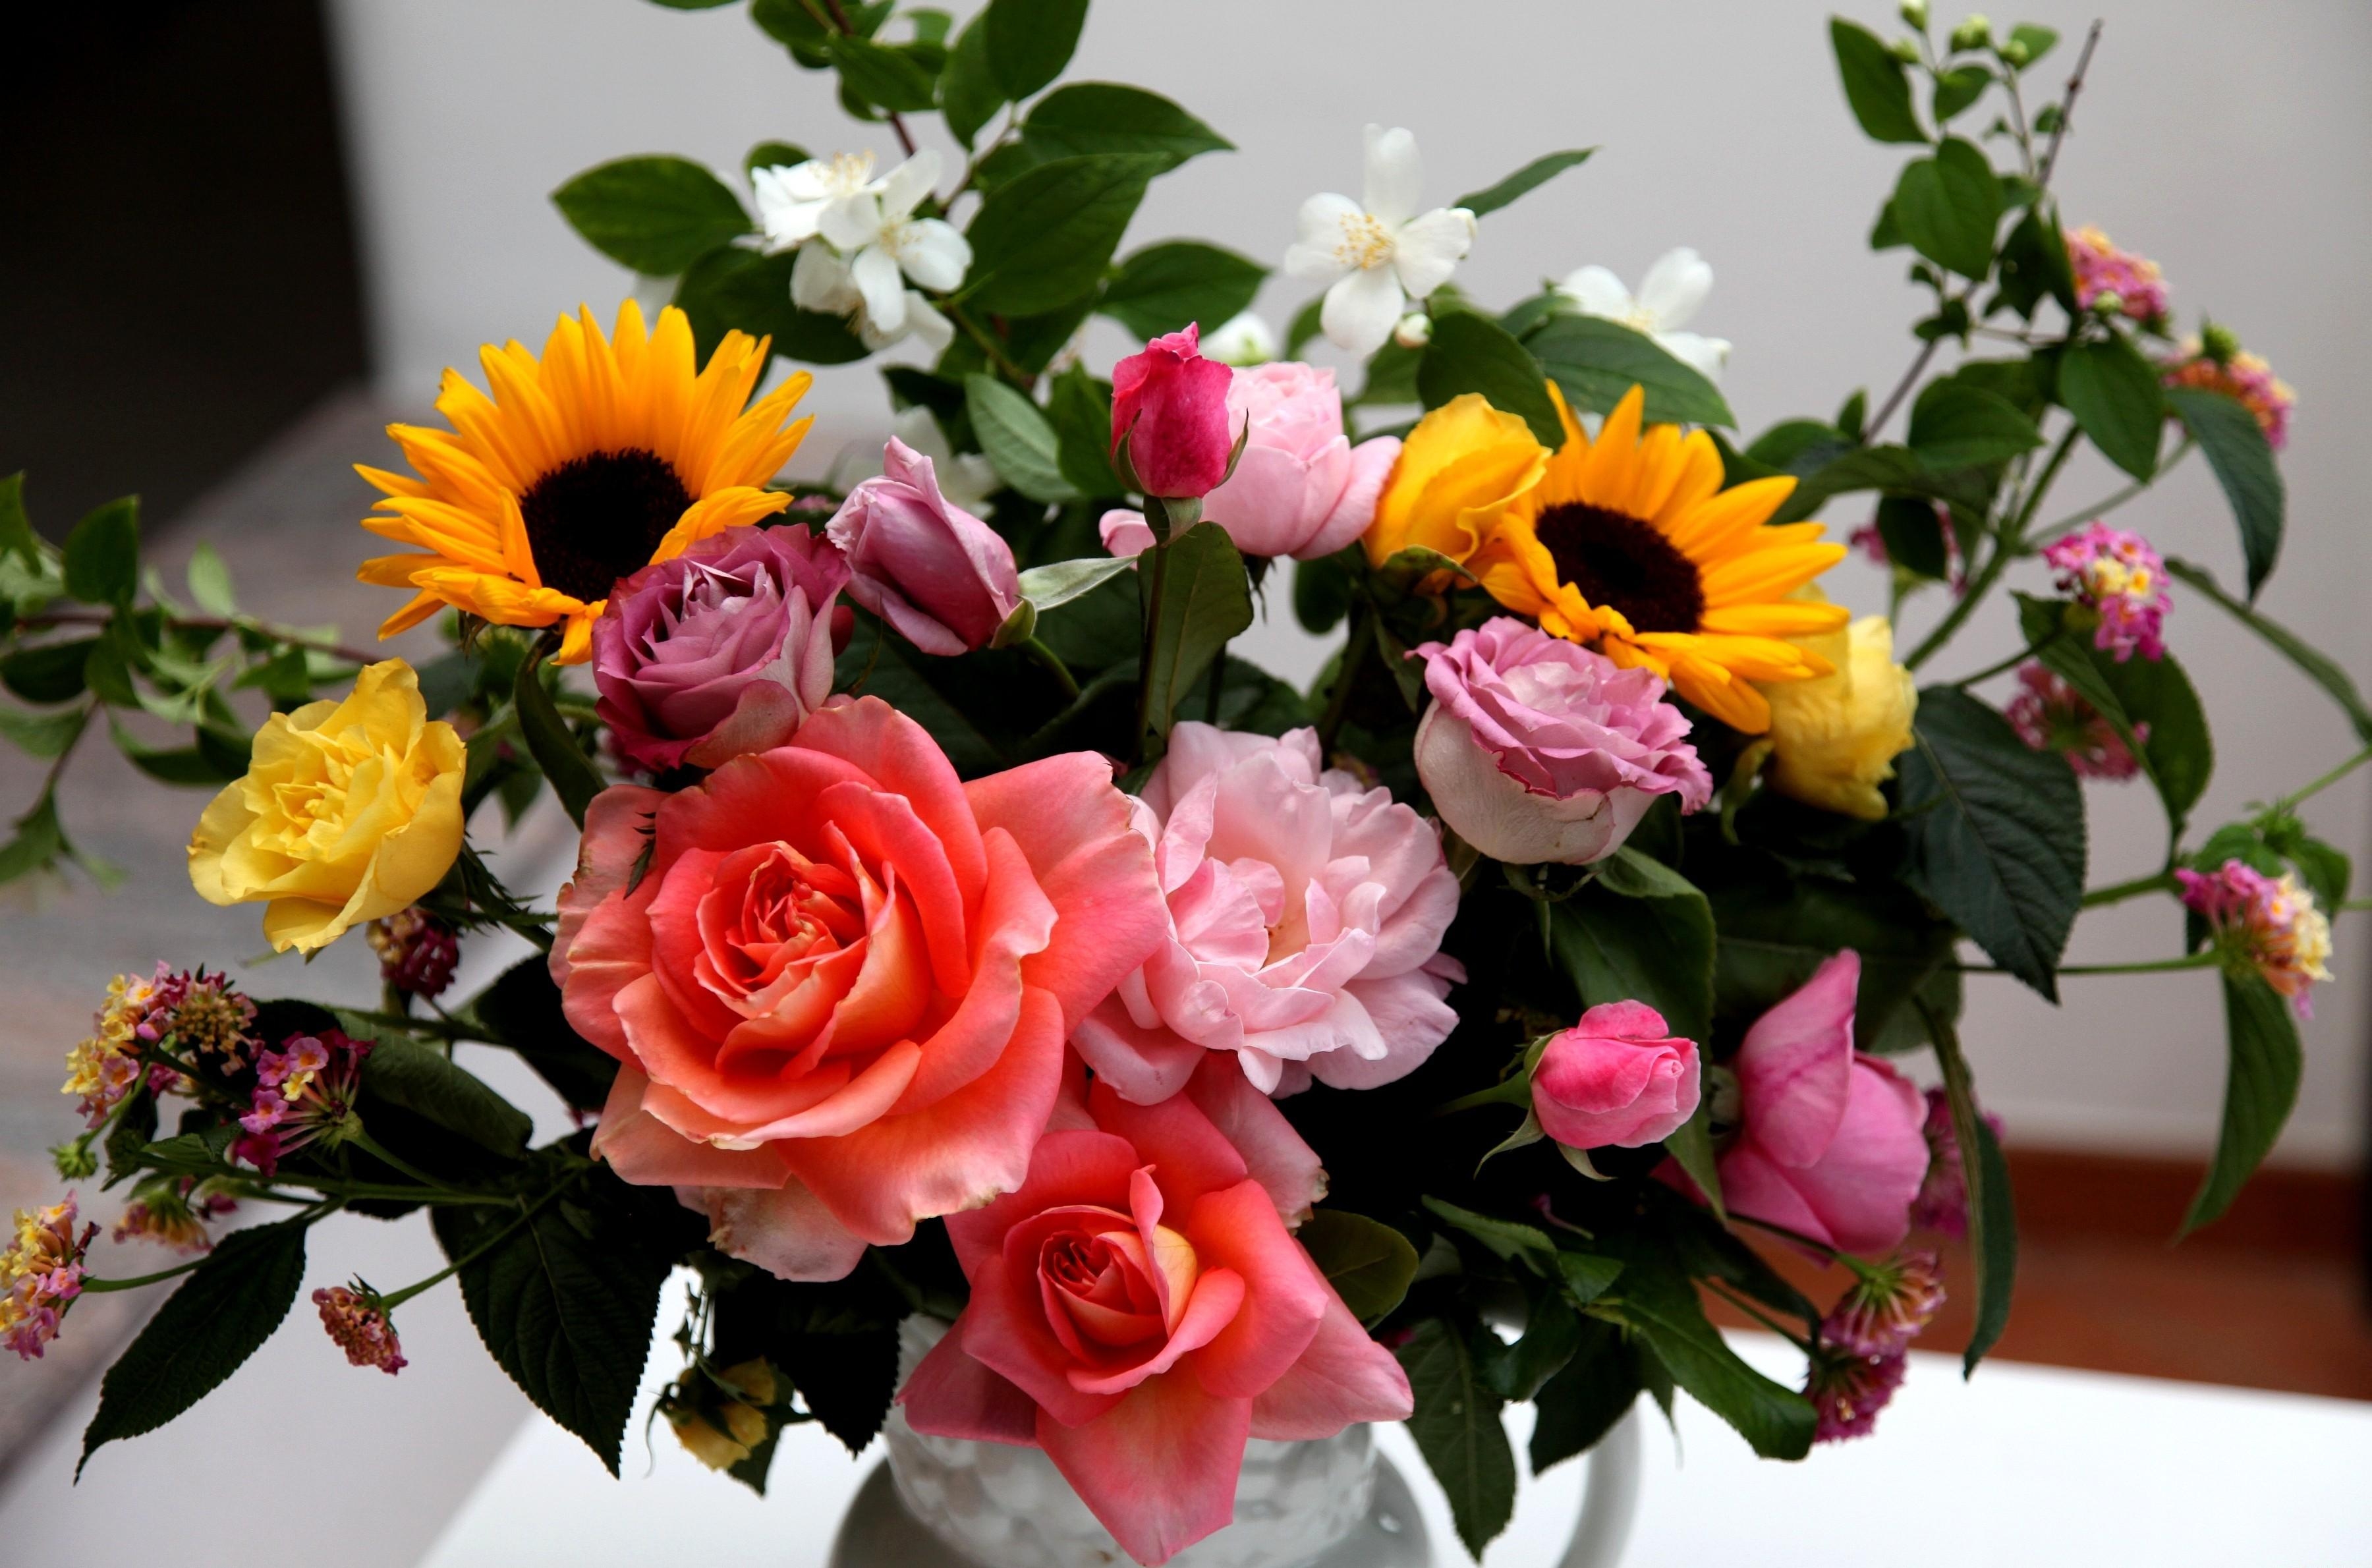 sunflowers, roses, flowers, bouquet, vase, composition, jasmine